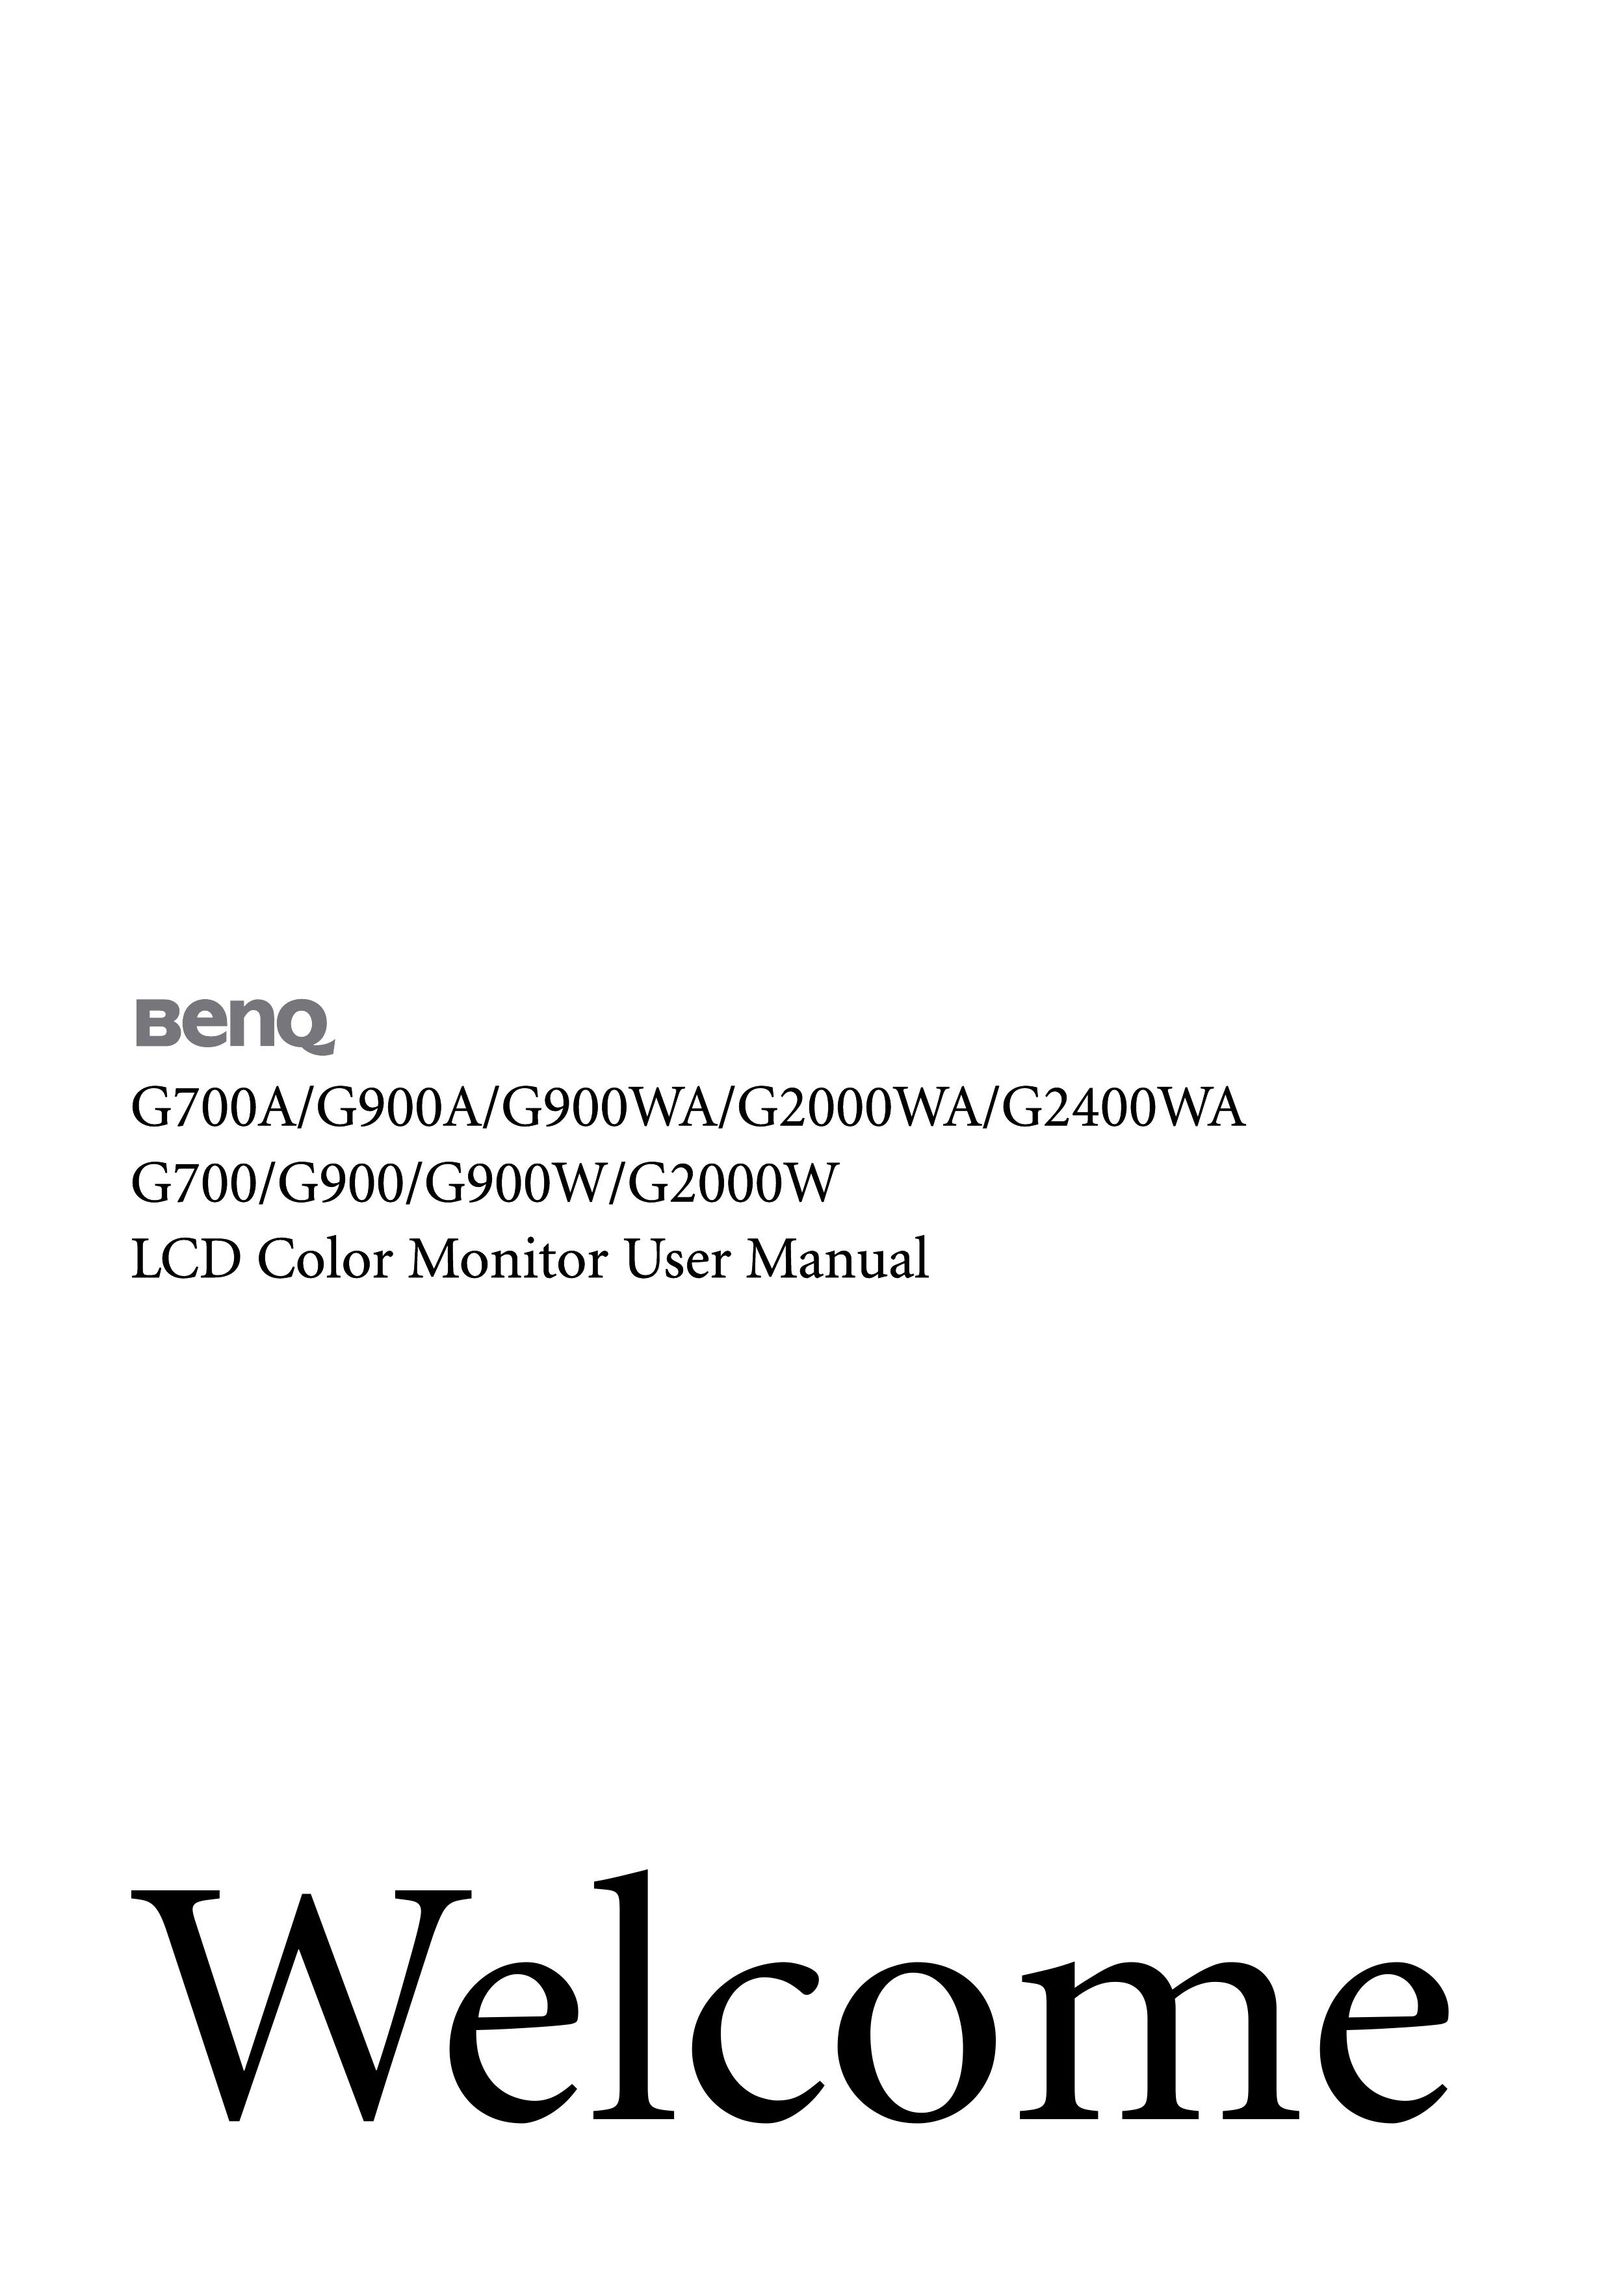 BenQ G900WA Car Video System User Manual